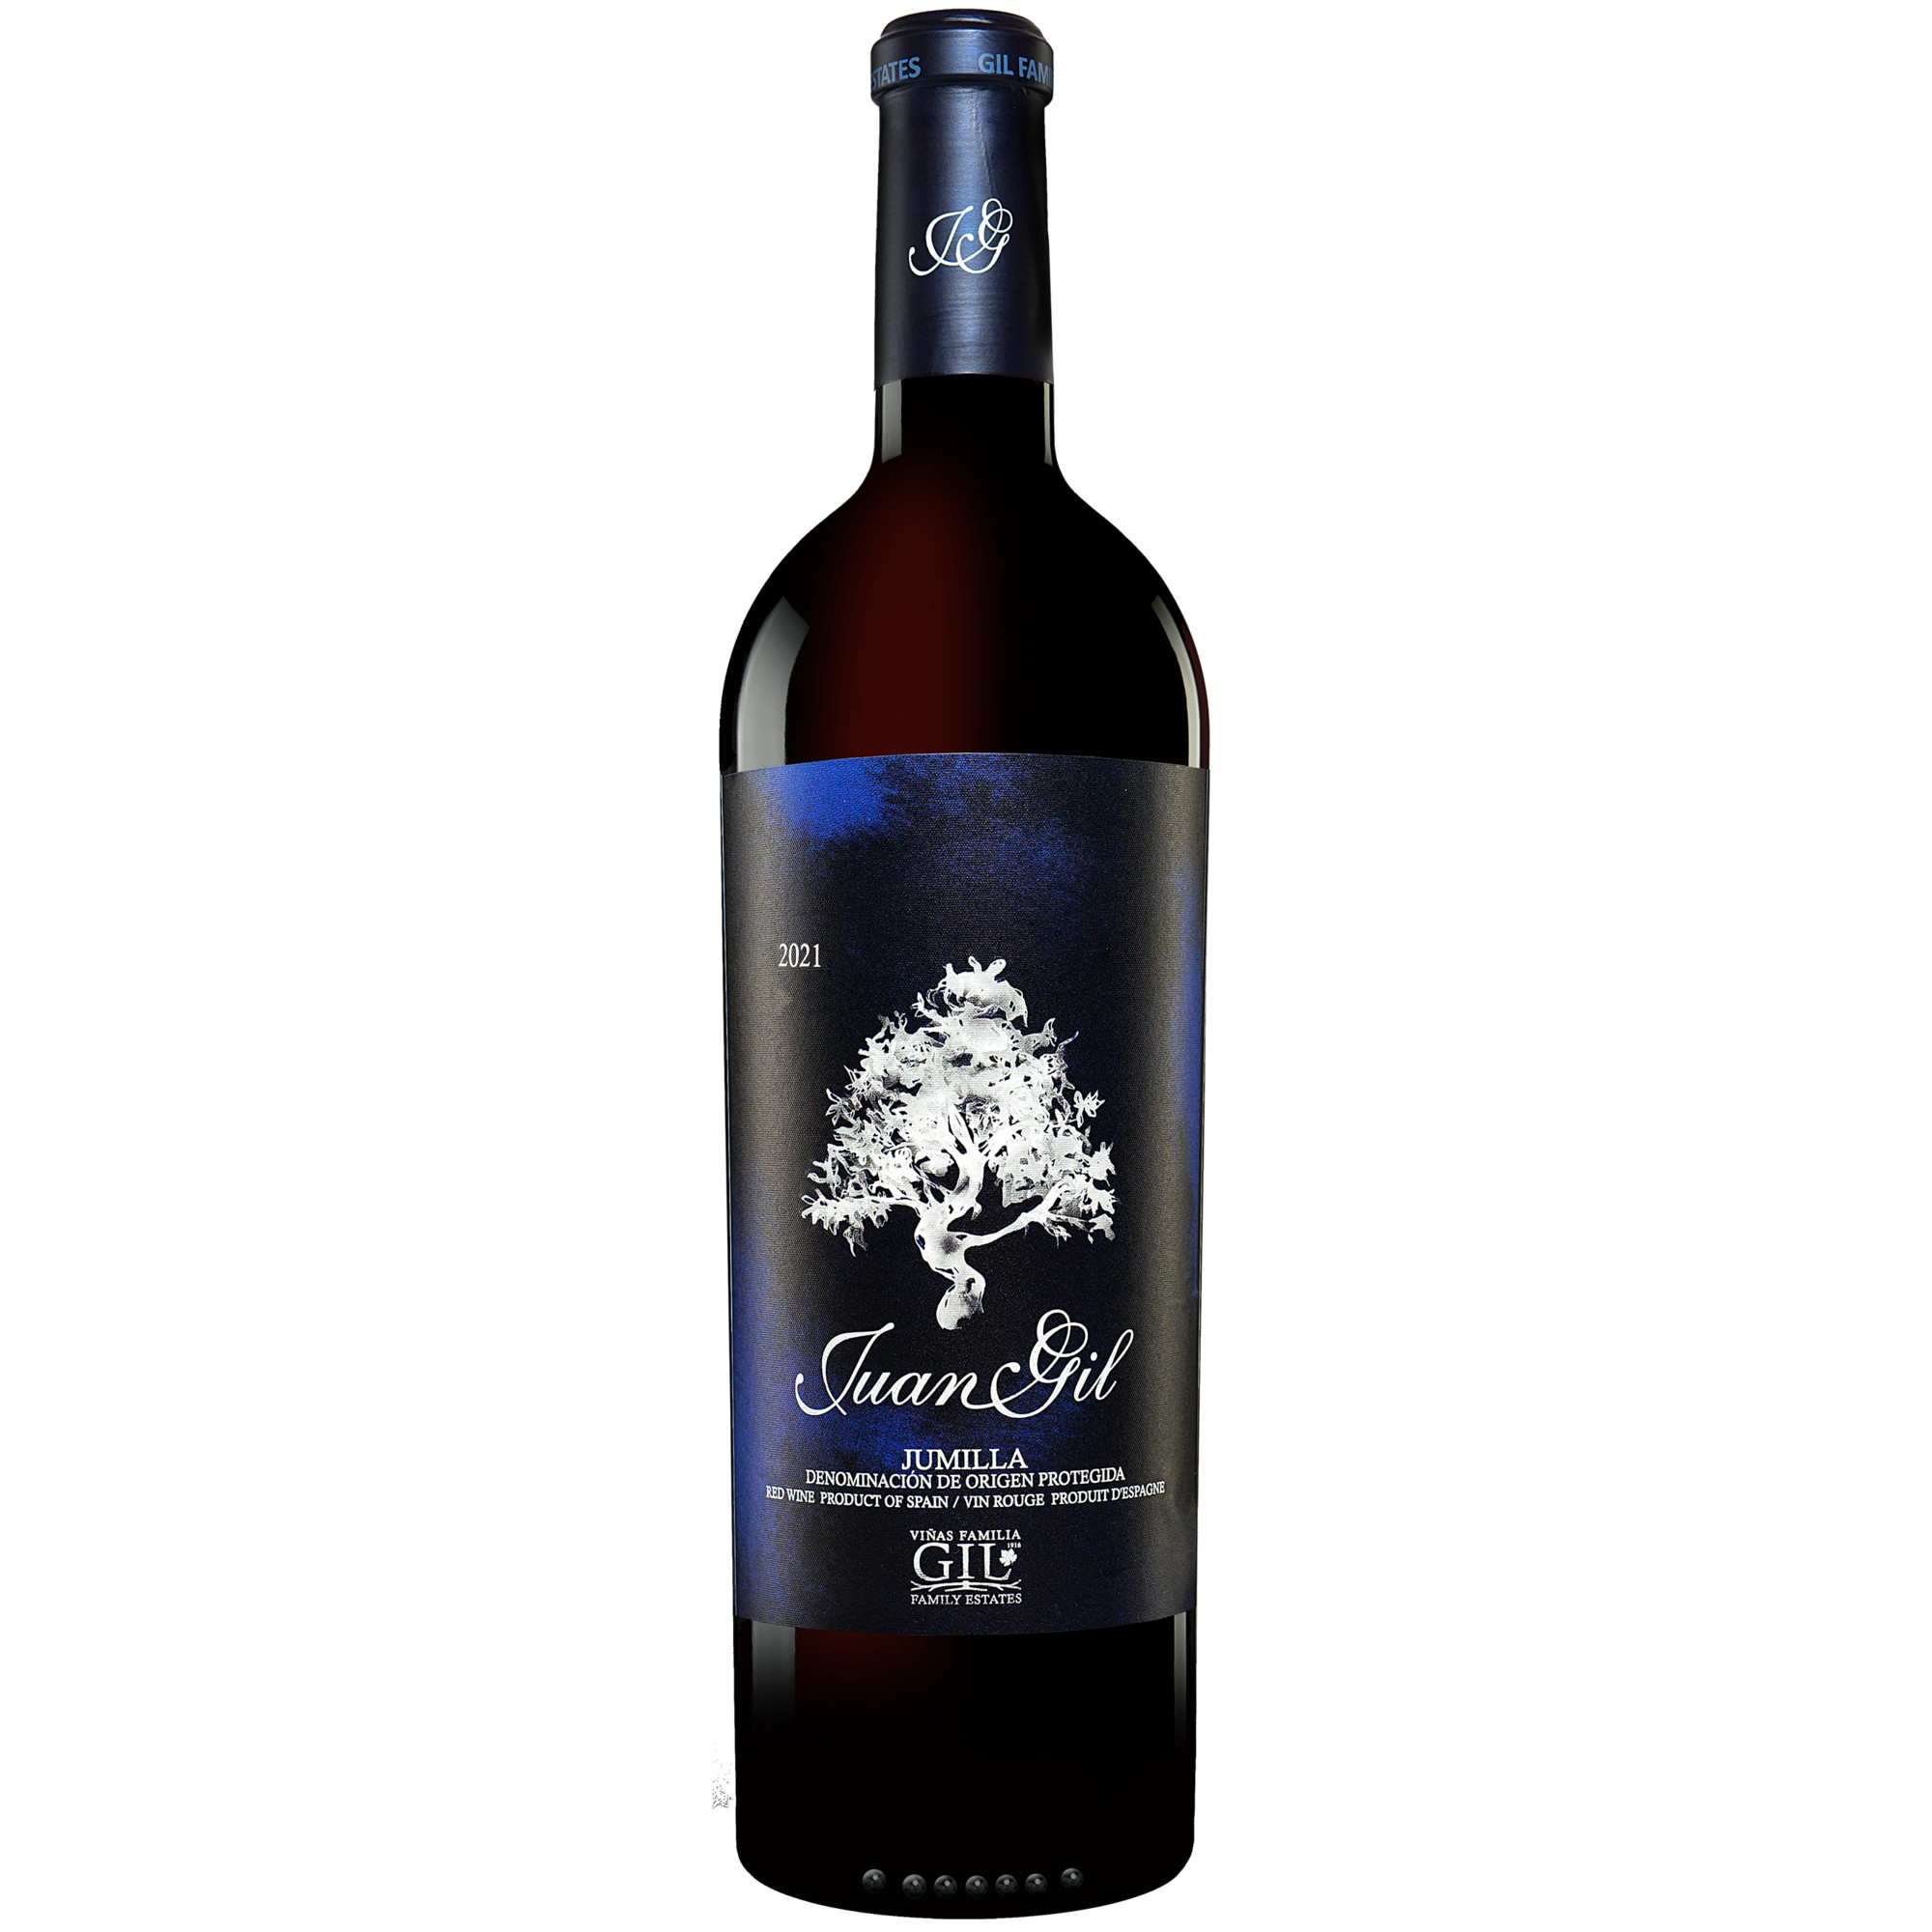 Juan Gil »Etiqueta Azul« 2021  015.5% Vol. Rotwein Trocken aus Spanien